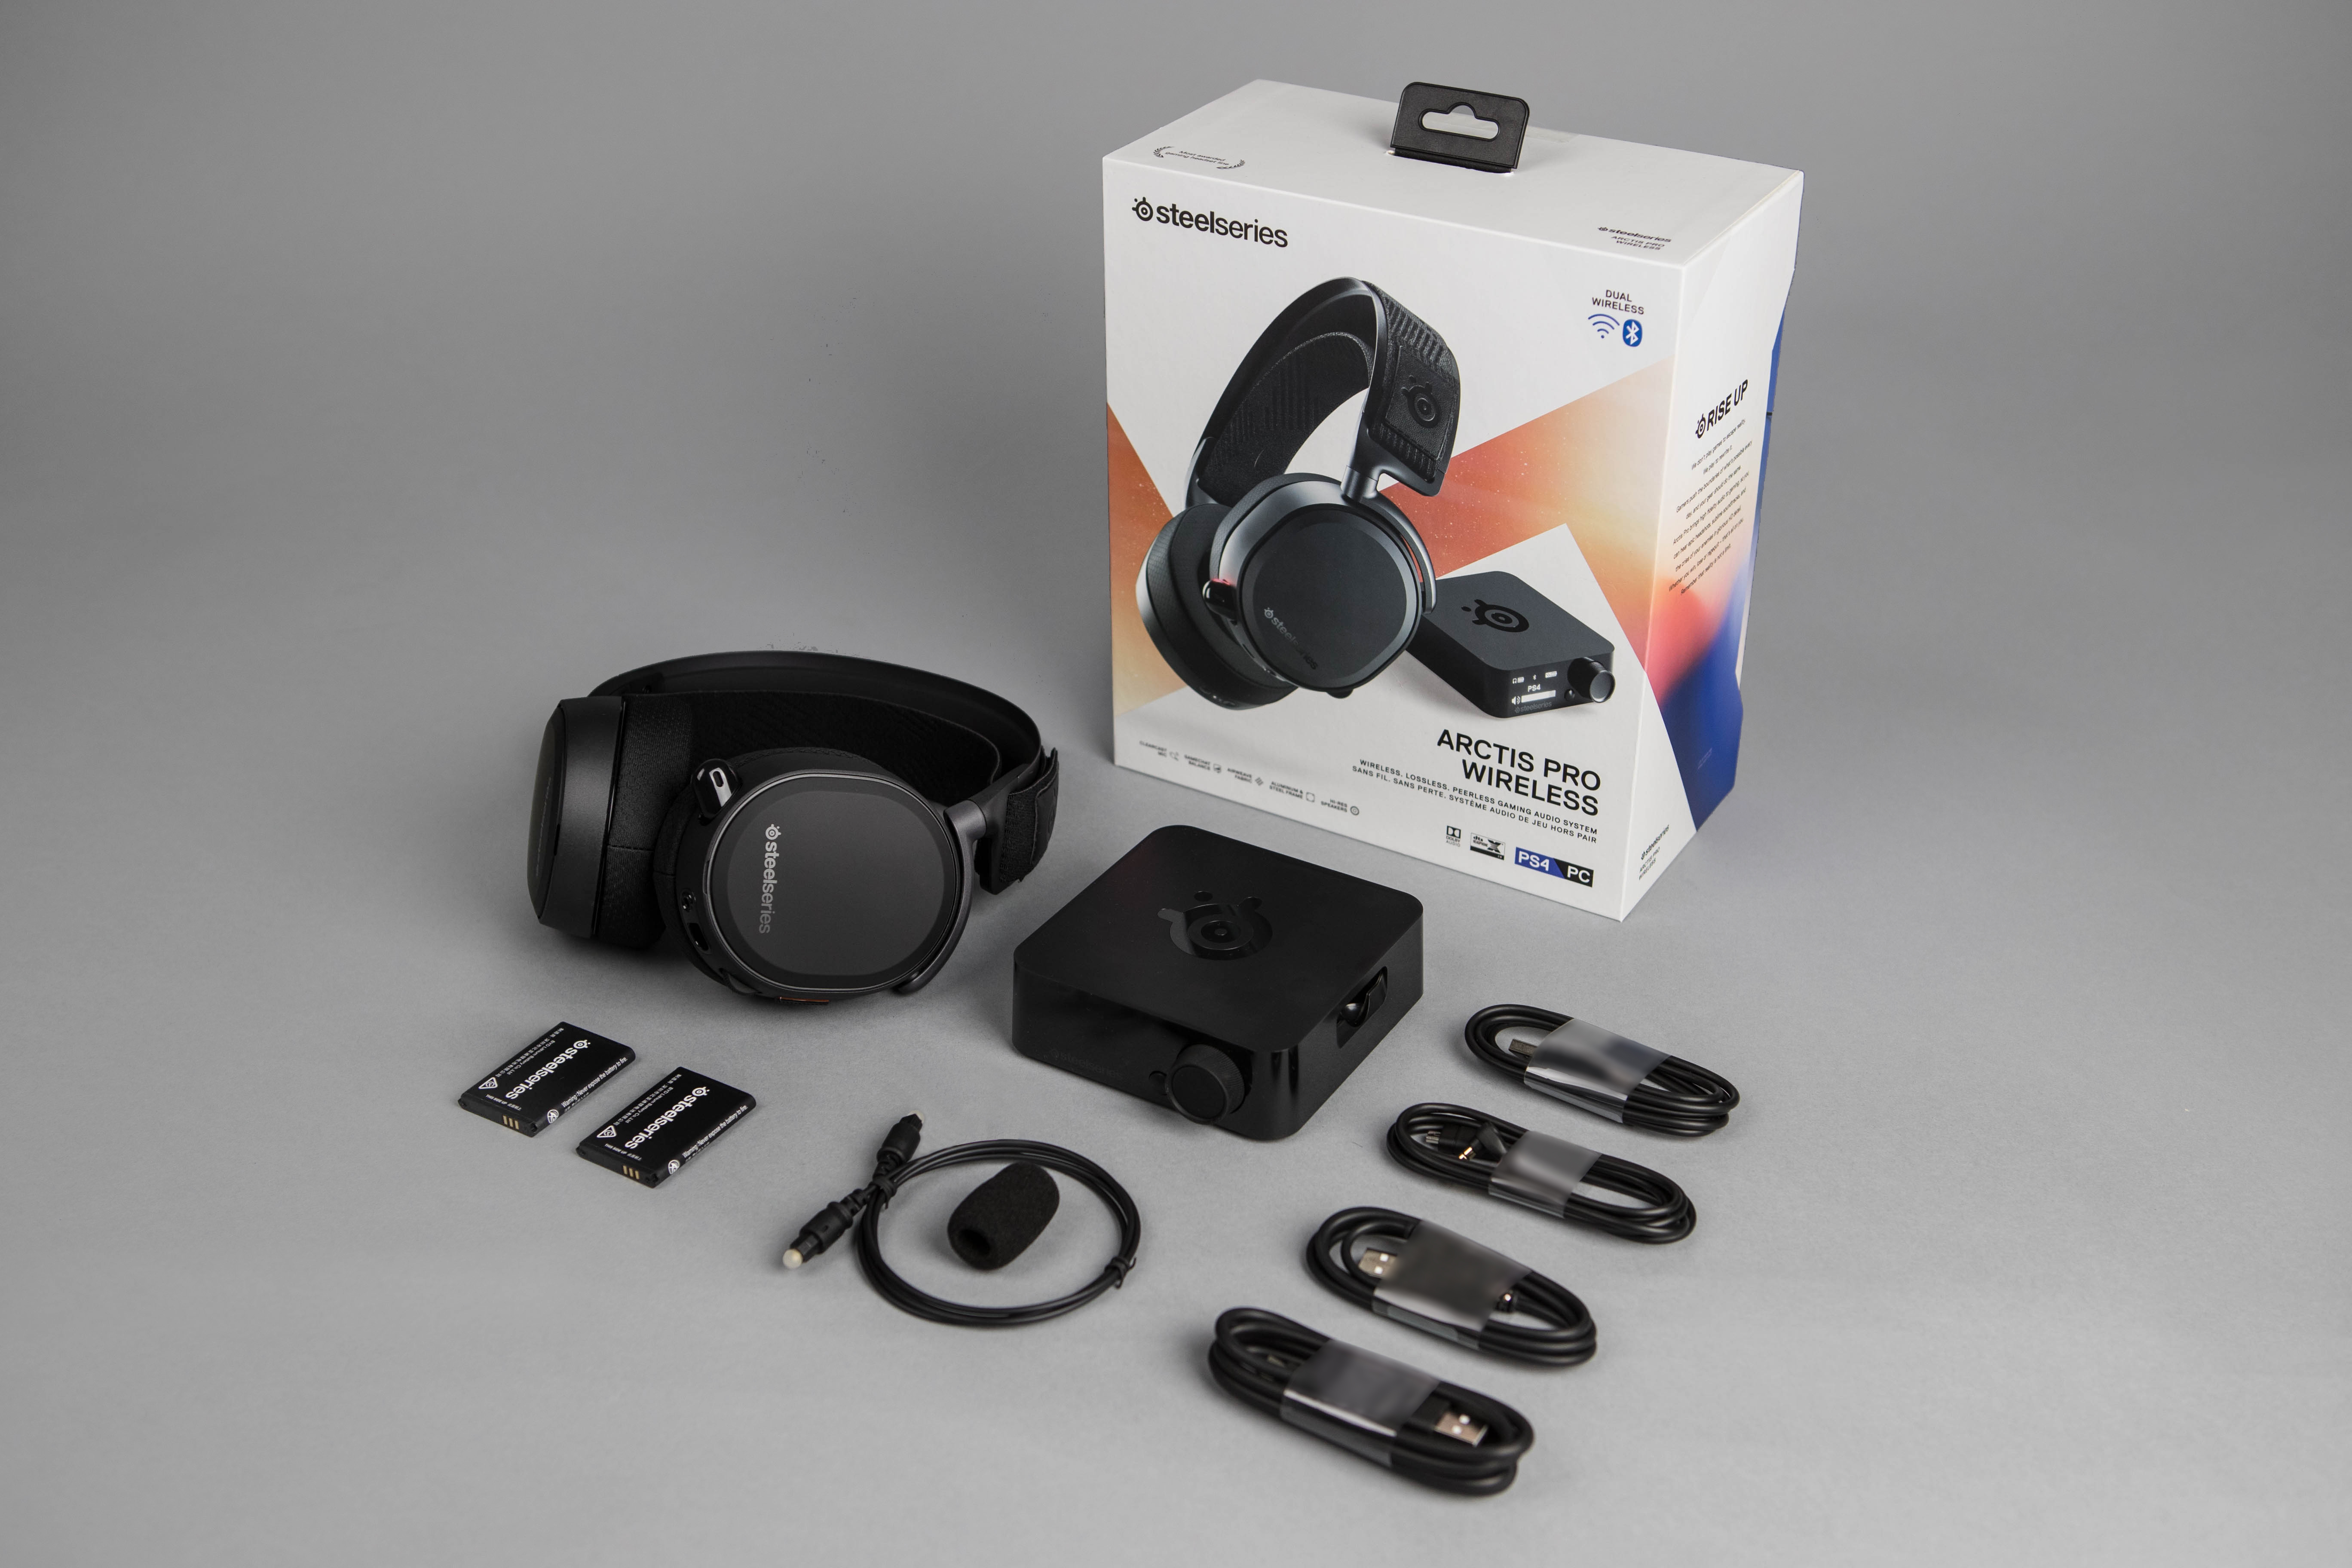 Arctis Pro Wireless - The SteelSeries Arctis Pro Gaming Headset Lineup: GameDAC